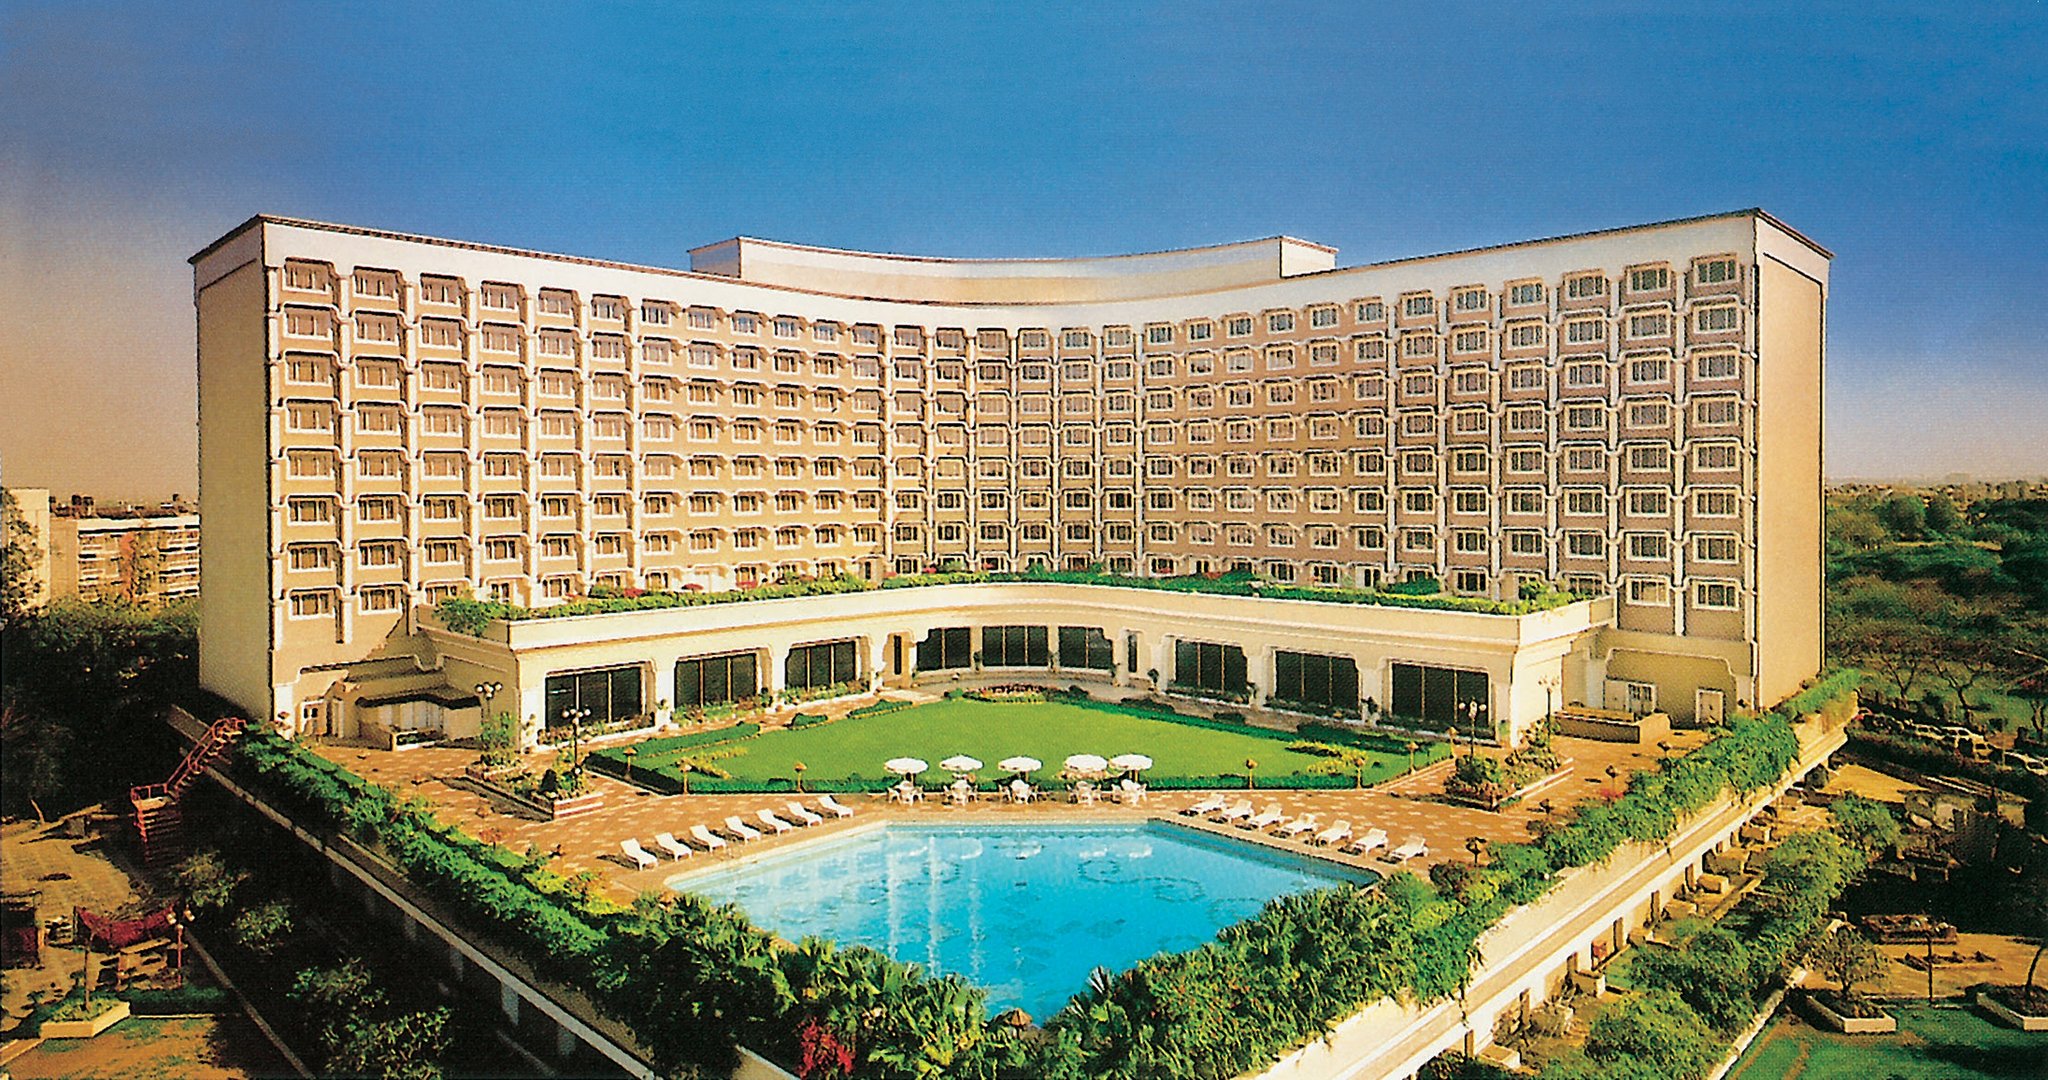 Taj Palace Hotel- Deluxe Delhi, India Hotels- GDS Reservation Codes